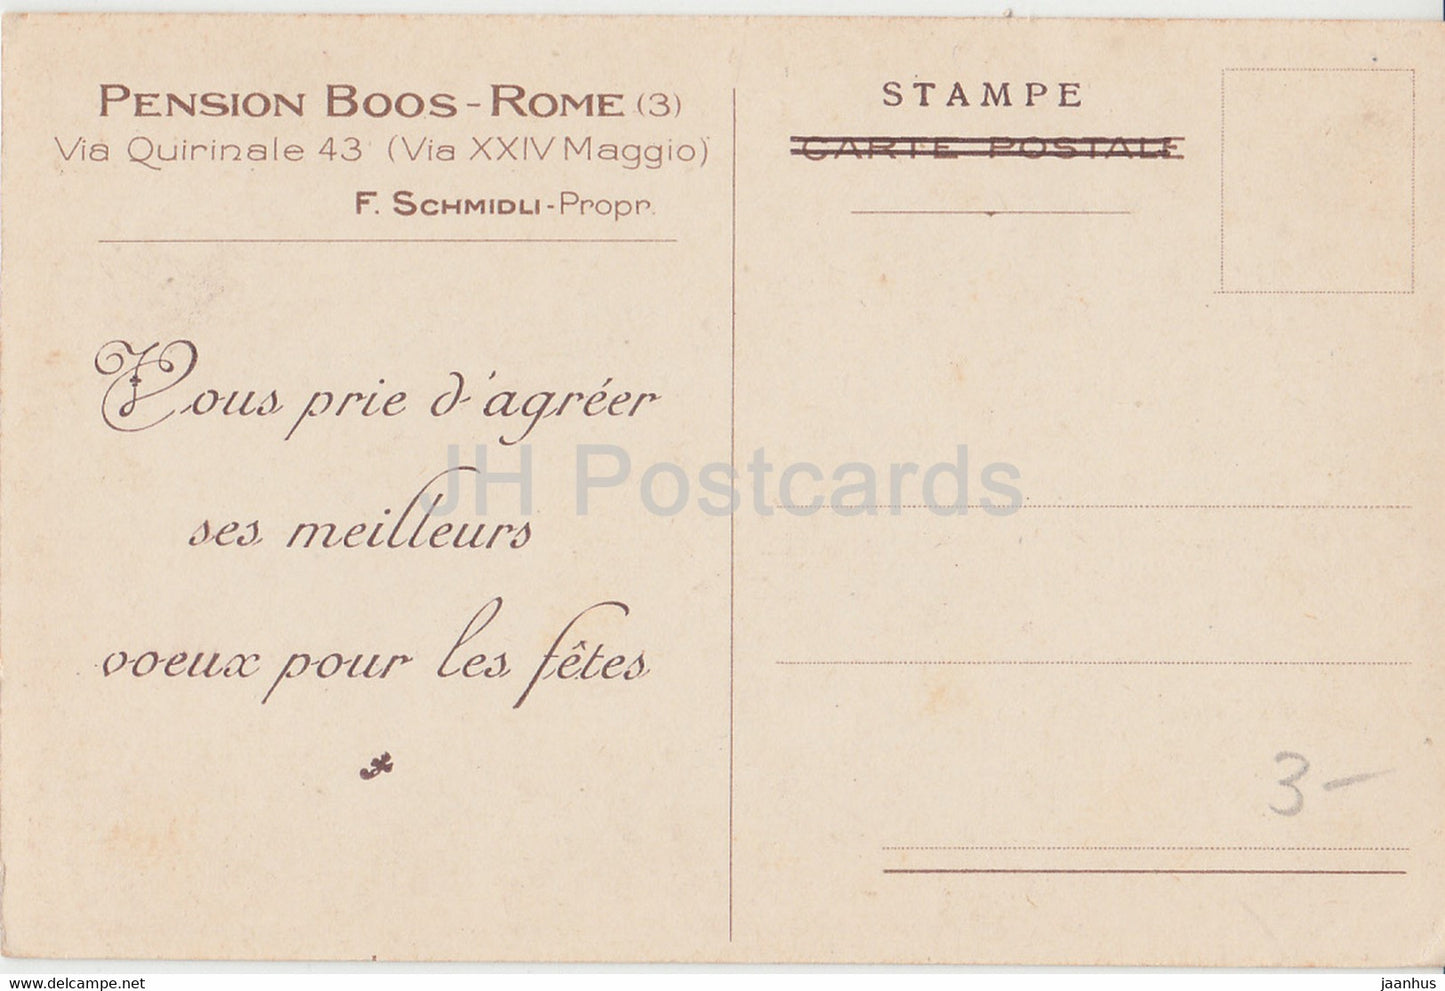 peinture de Guido Reni - Aurora - cheval - Palazzo Rospigliosi Roma - art italien - carte postale ancienne - Italie - inutilisé